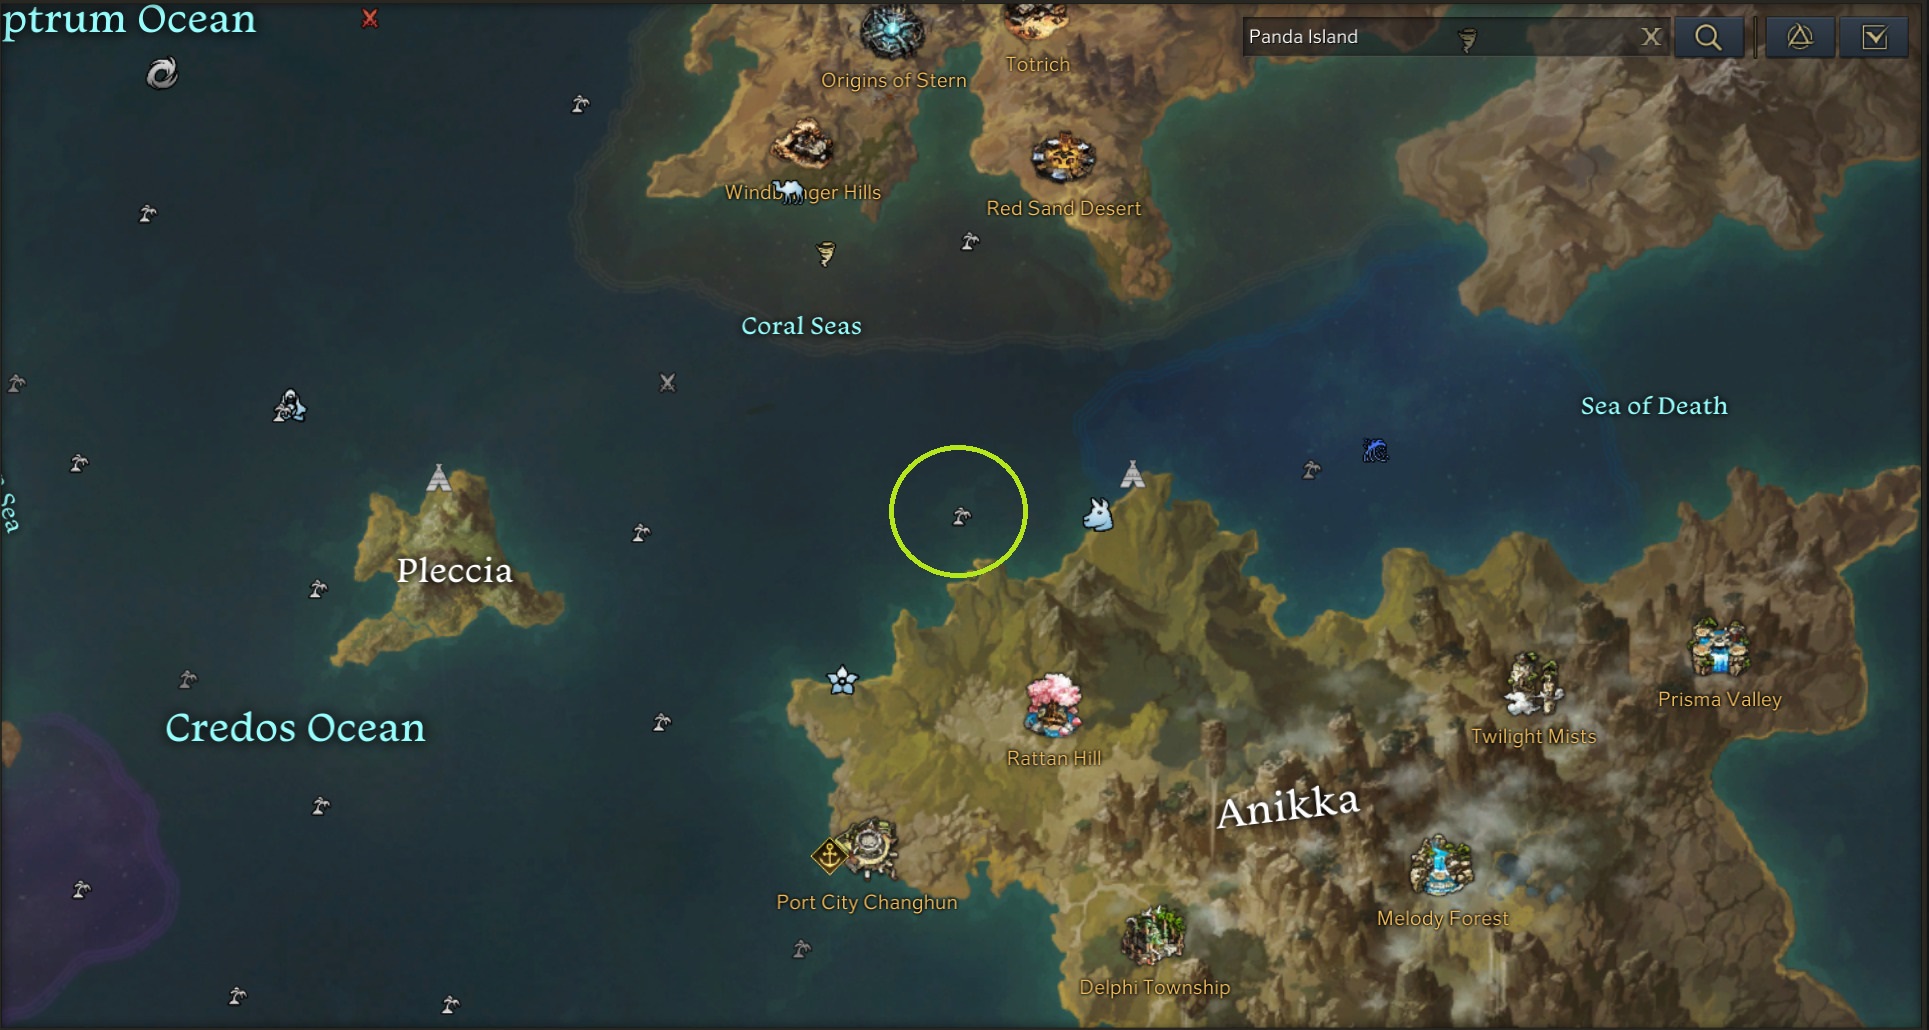 Panda Island Location Lost Ark